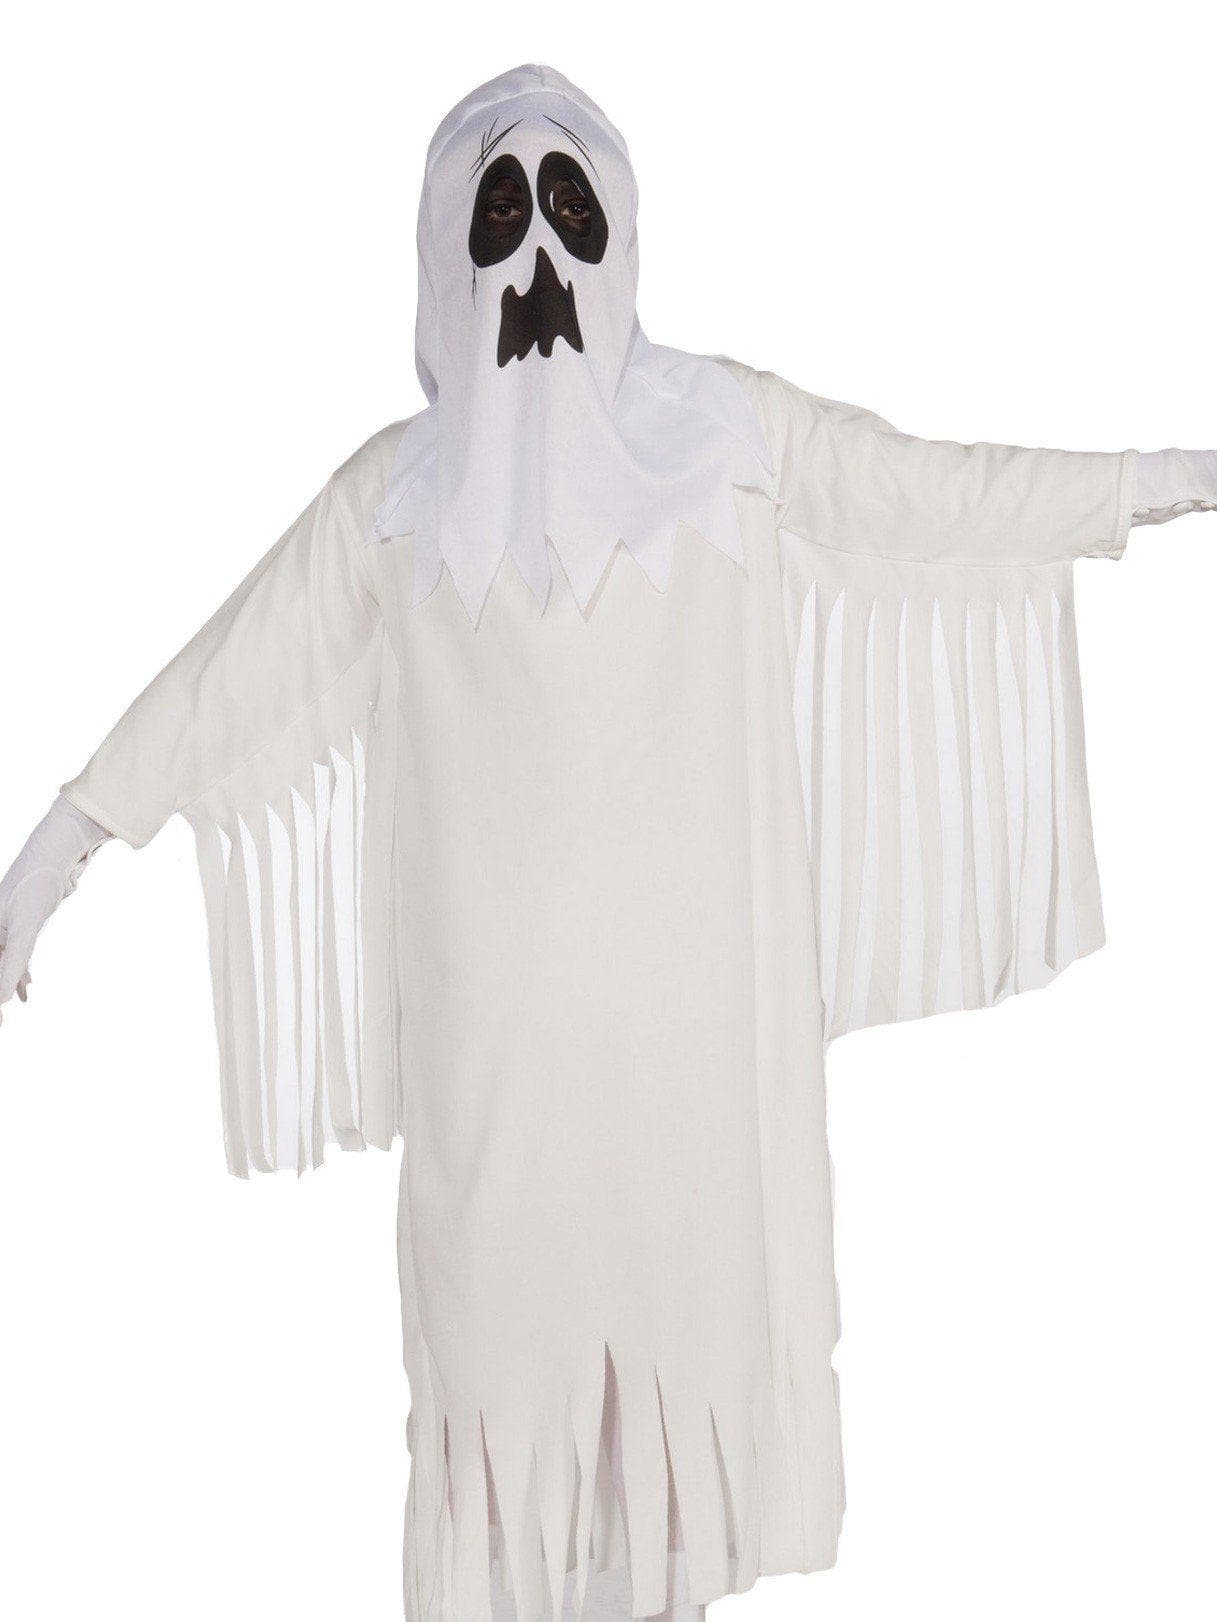 Kids' Haunted Ghost Costume - costumes.com